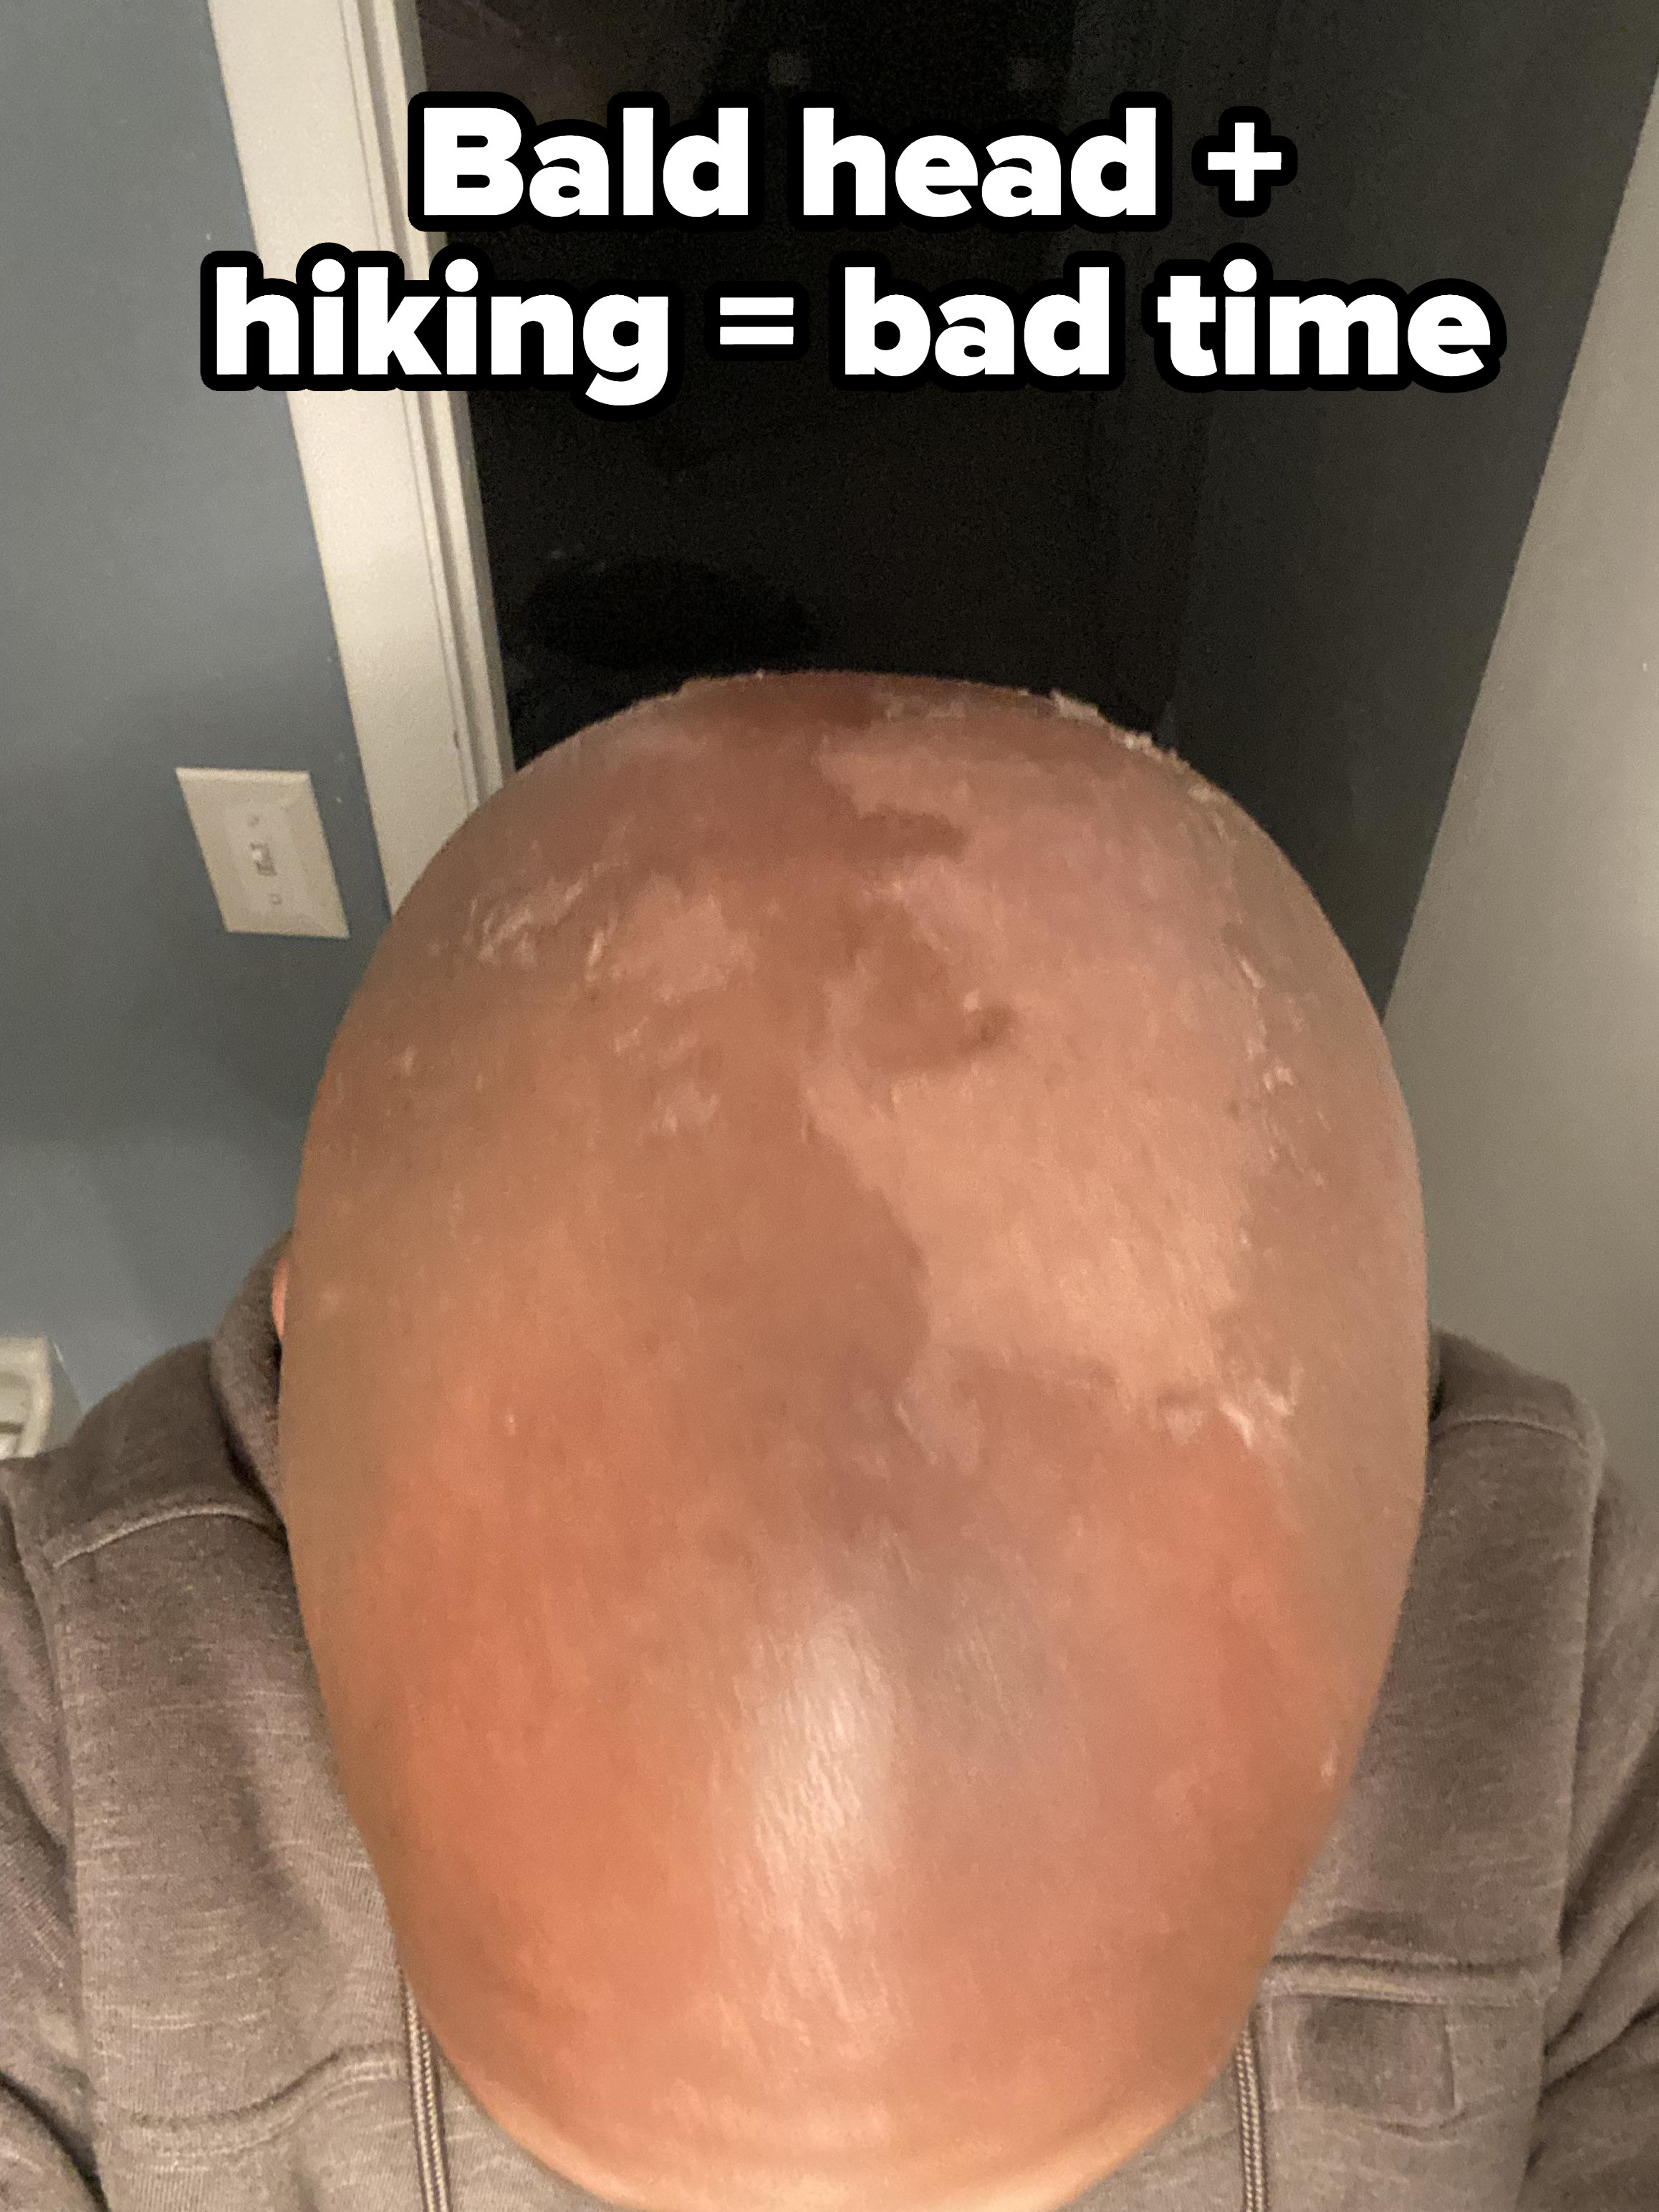 Bald guy with peeling sunburn on his head